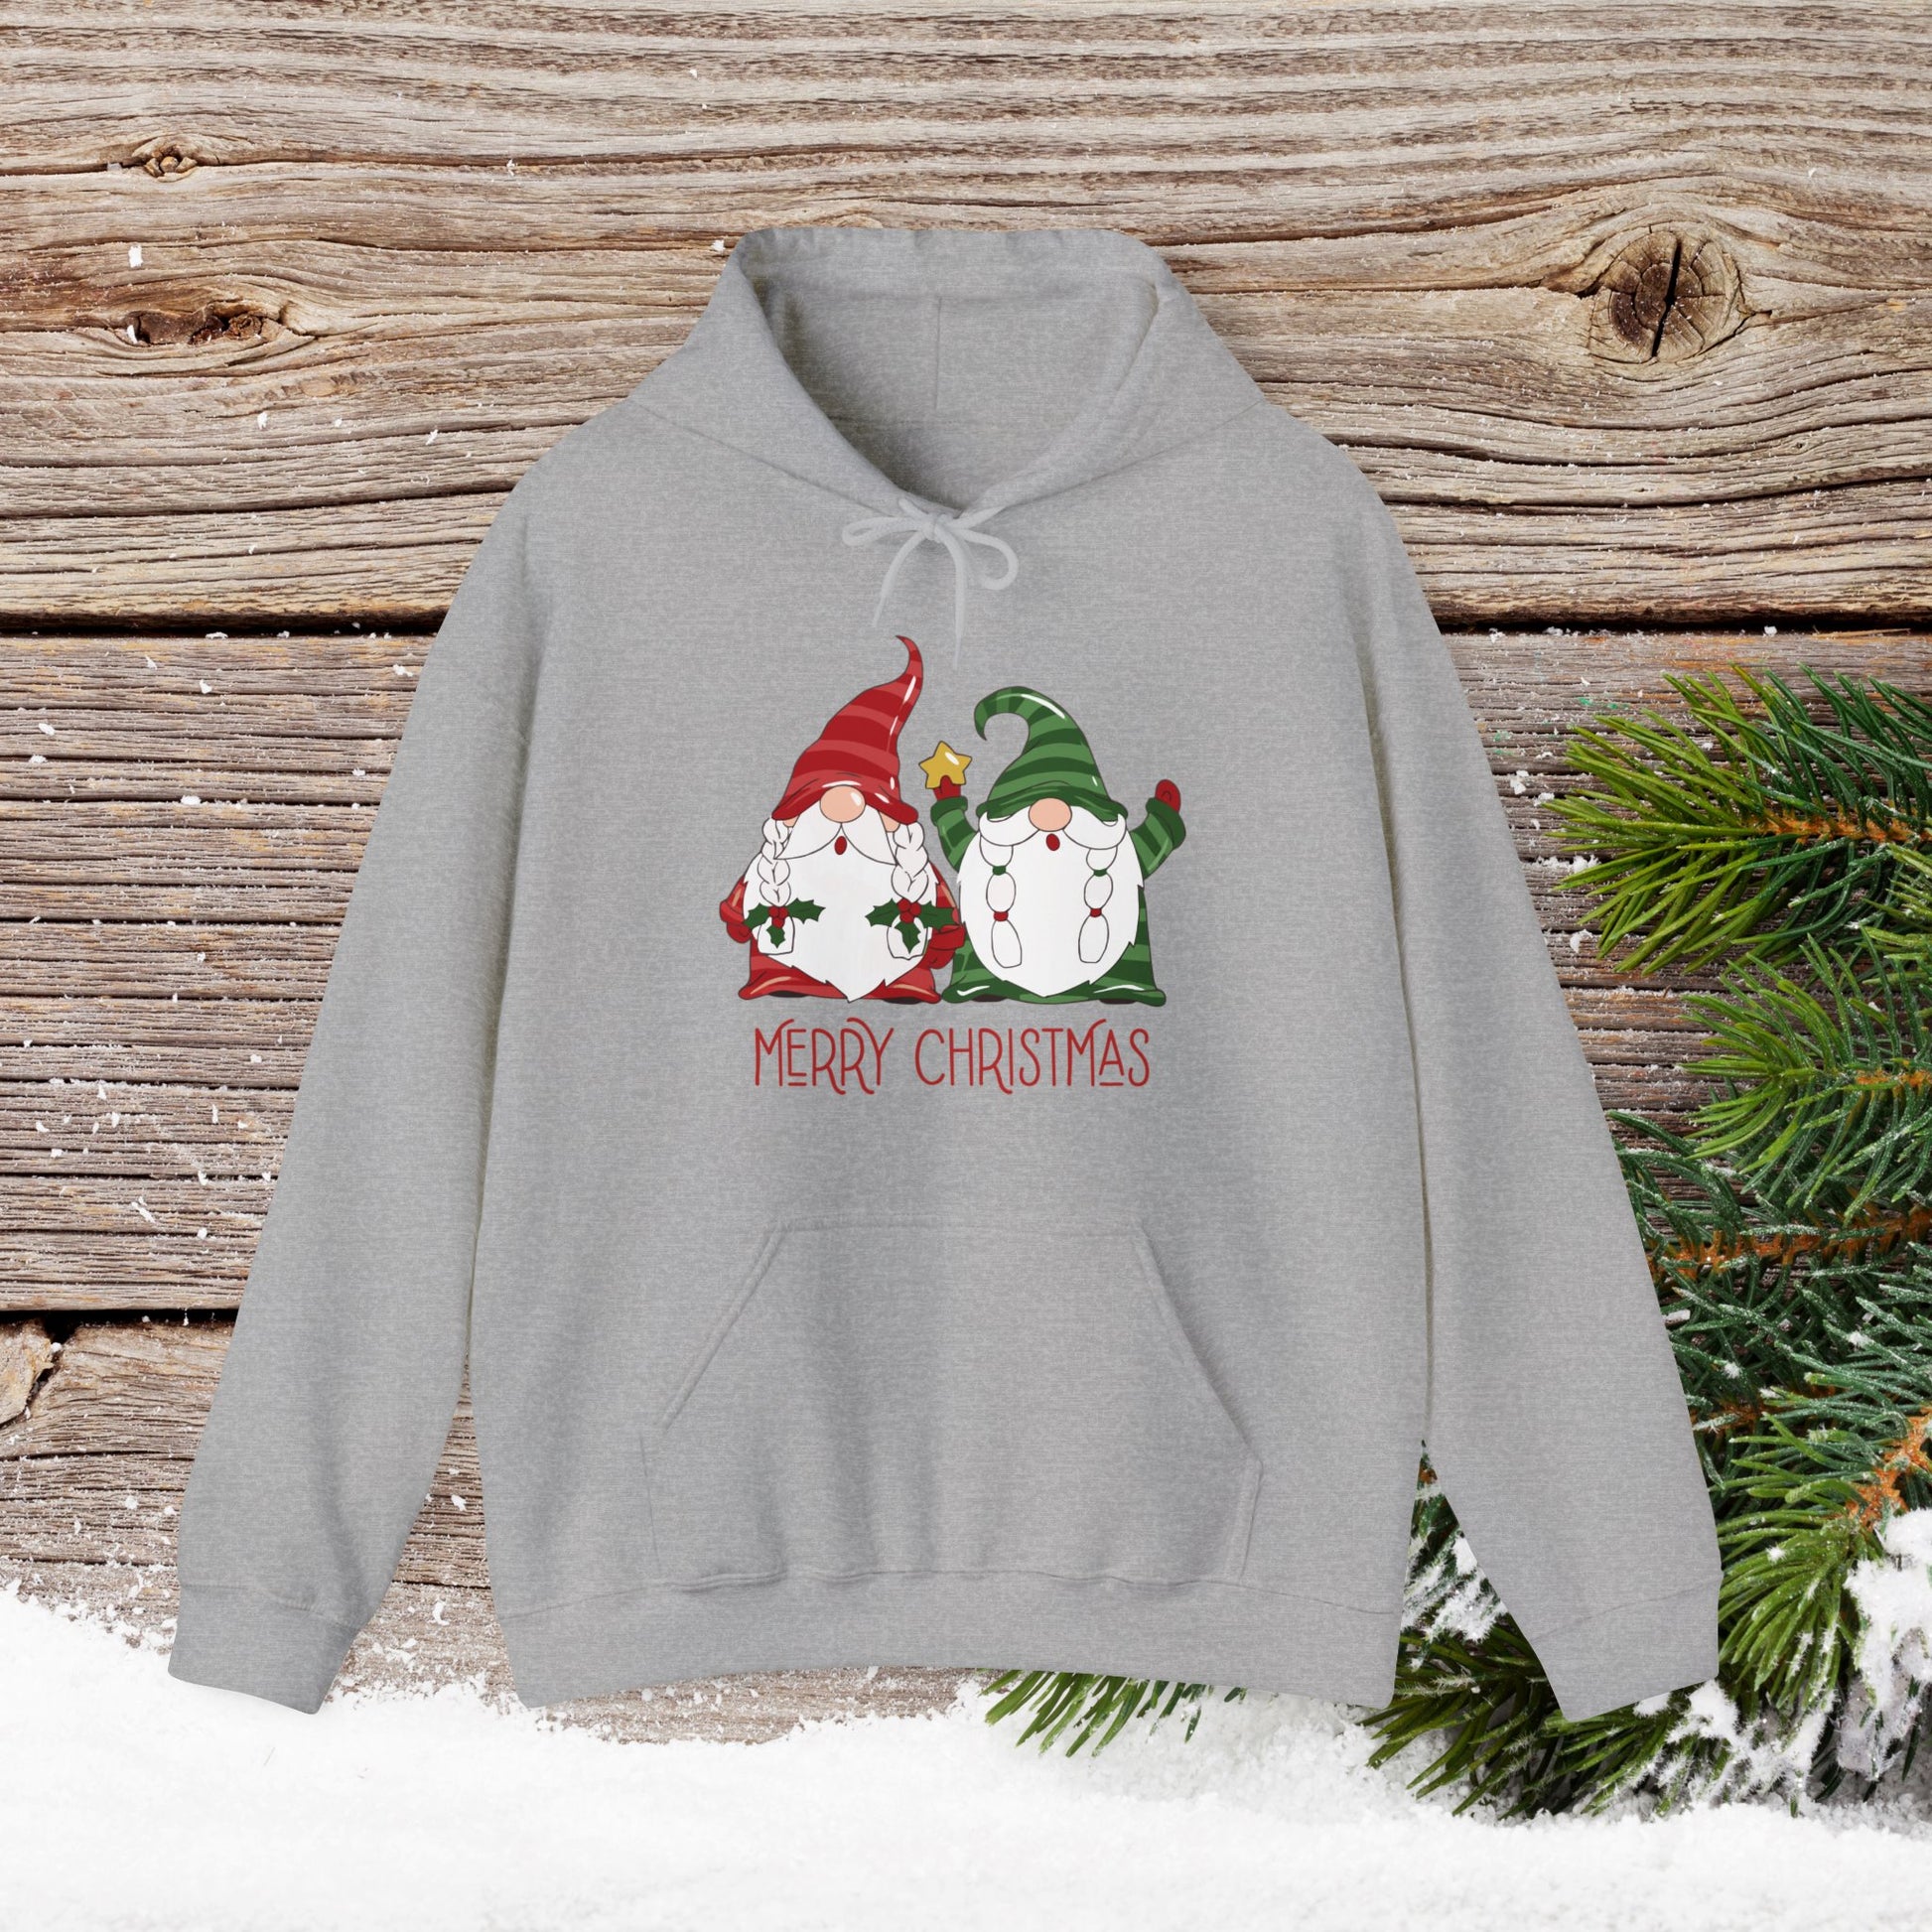 Christmas Hoodie - Gnome Merry Christmas - Cute Christmas Shirts - Youth and Adult Christmas Hooded Sweatshirt Hooded Sweatshirt Graphic Avenue Light Gray Adult Small 